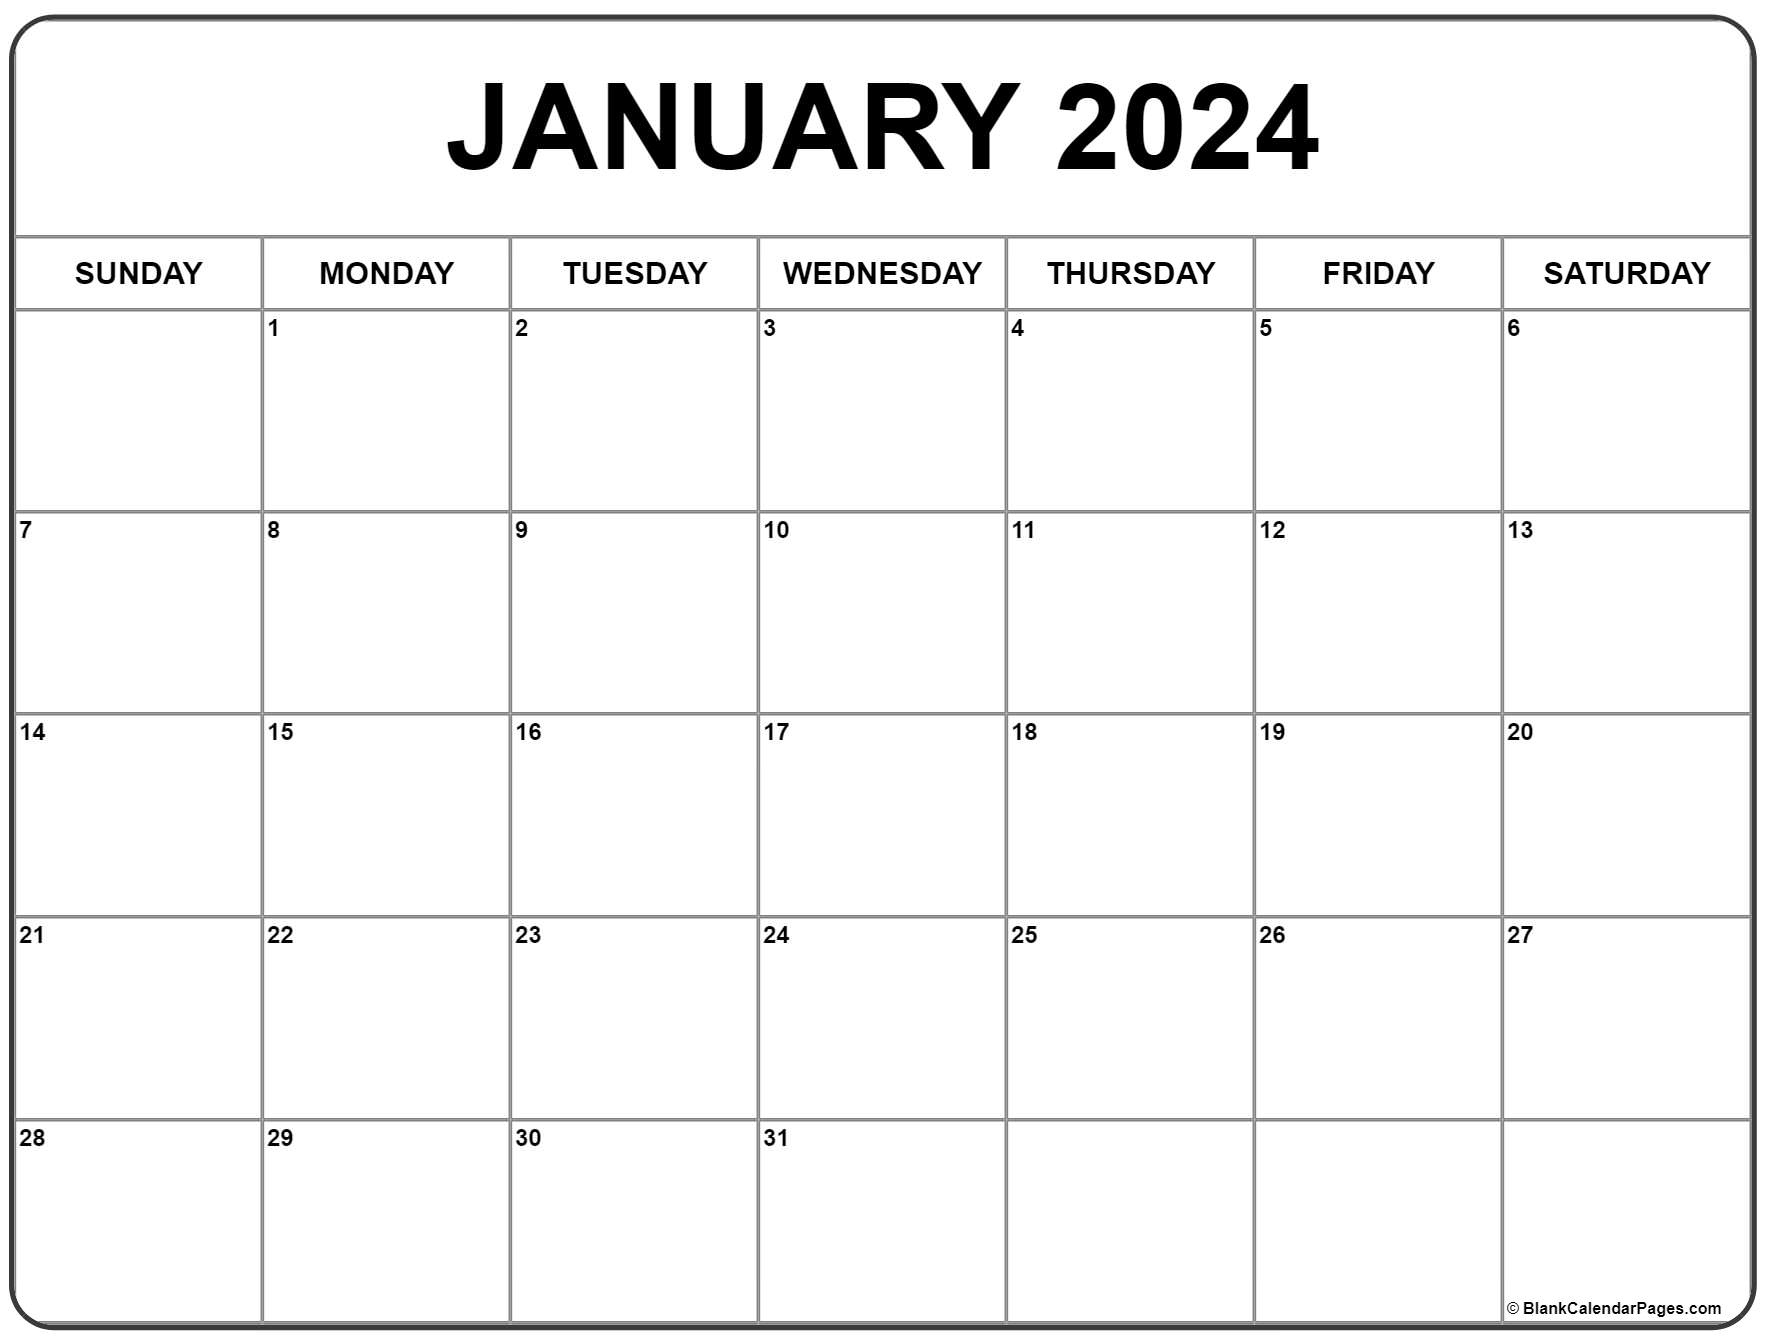 January 2024 Calendar | Free Printable Calendar | January 2024 Printable Calendar